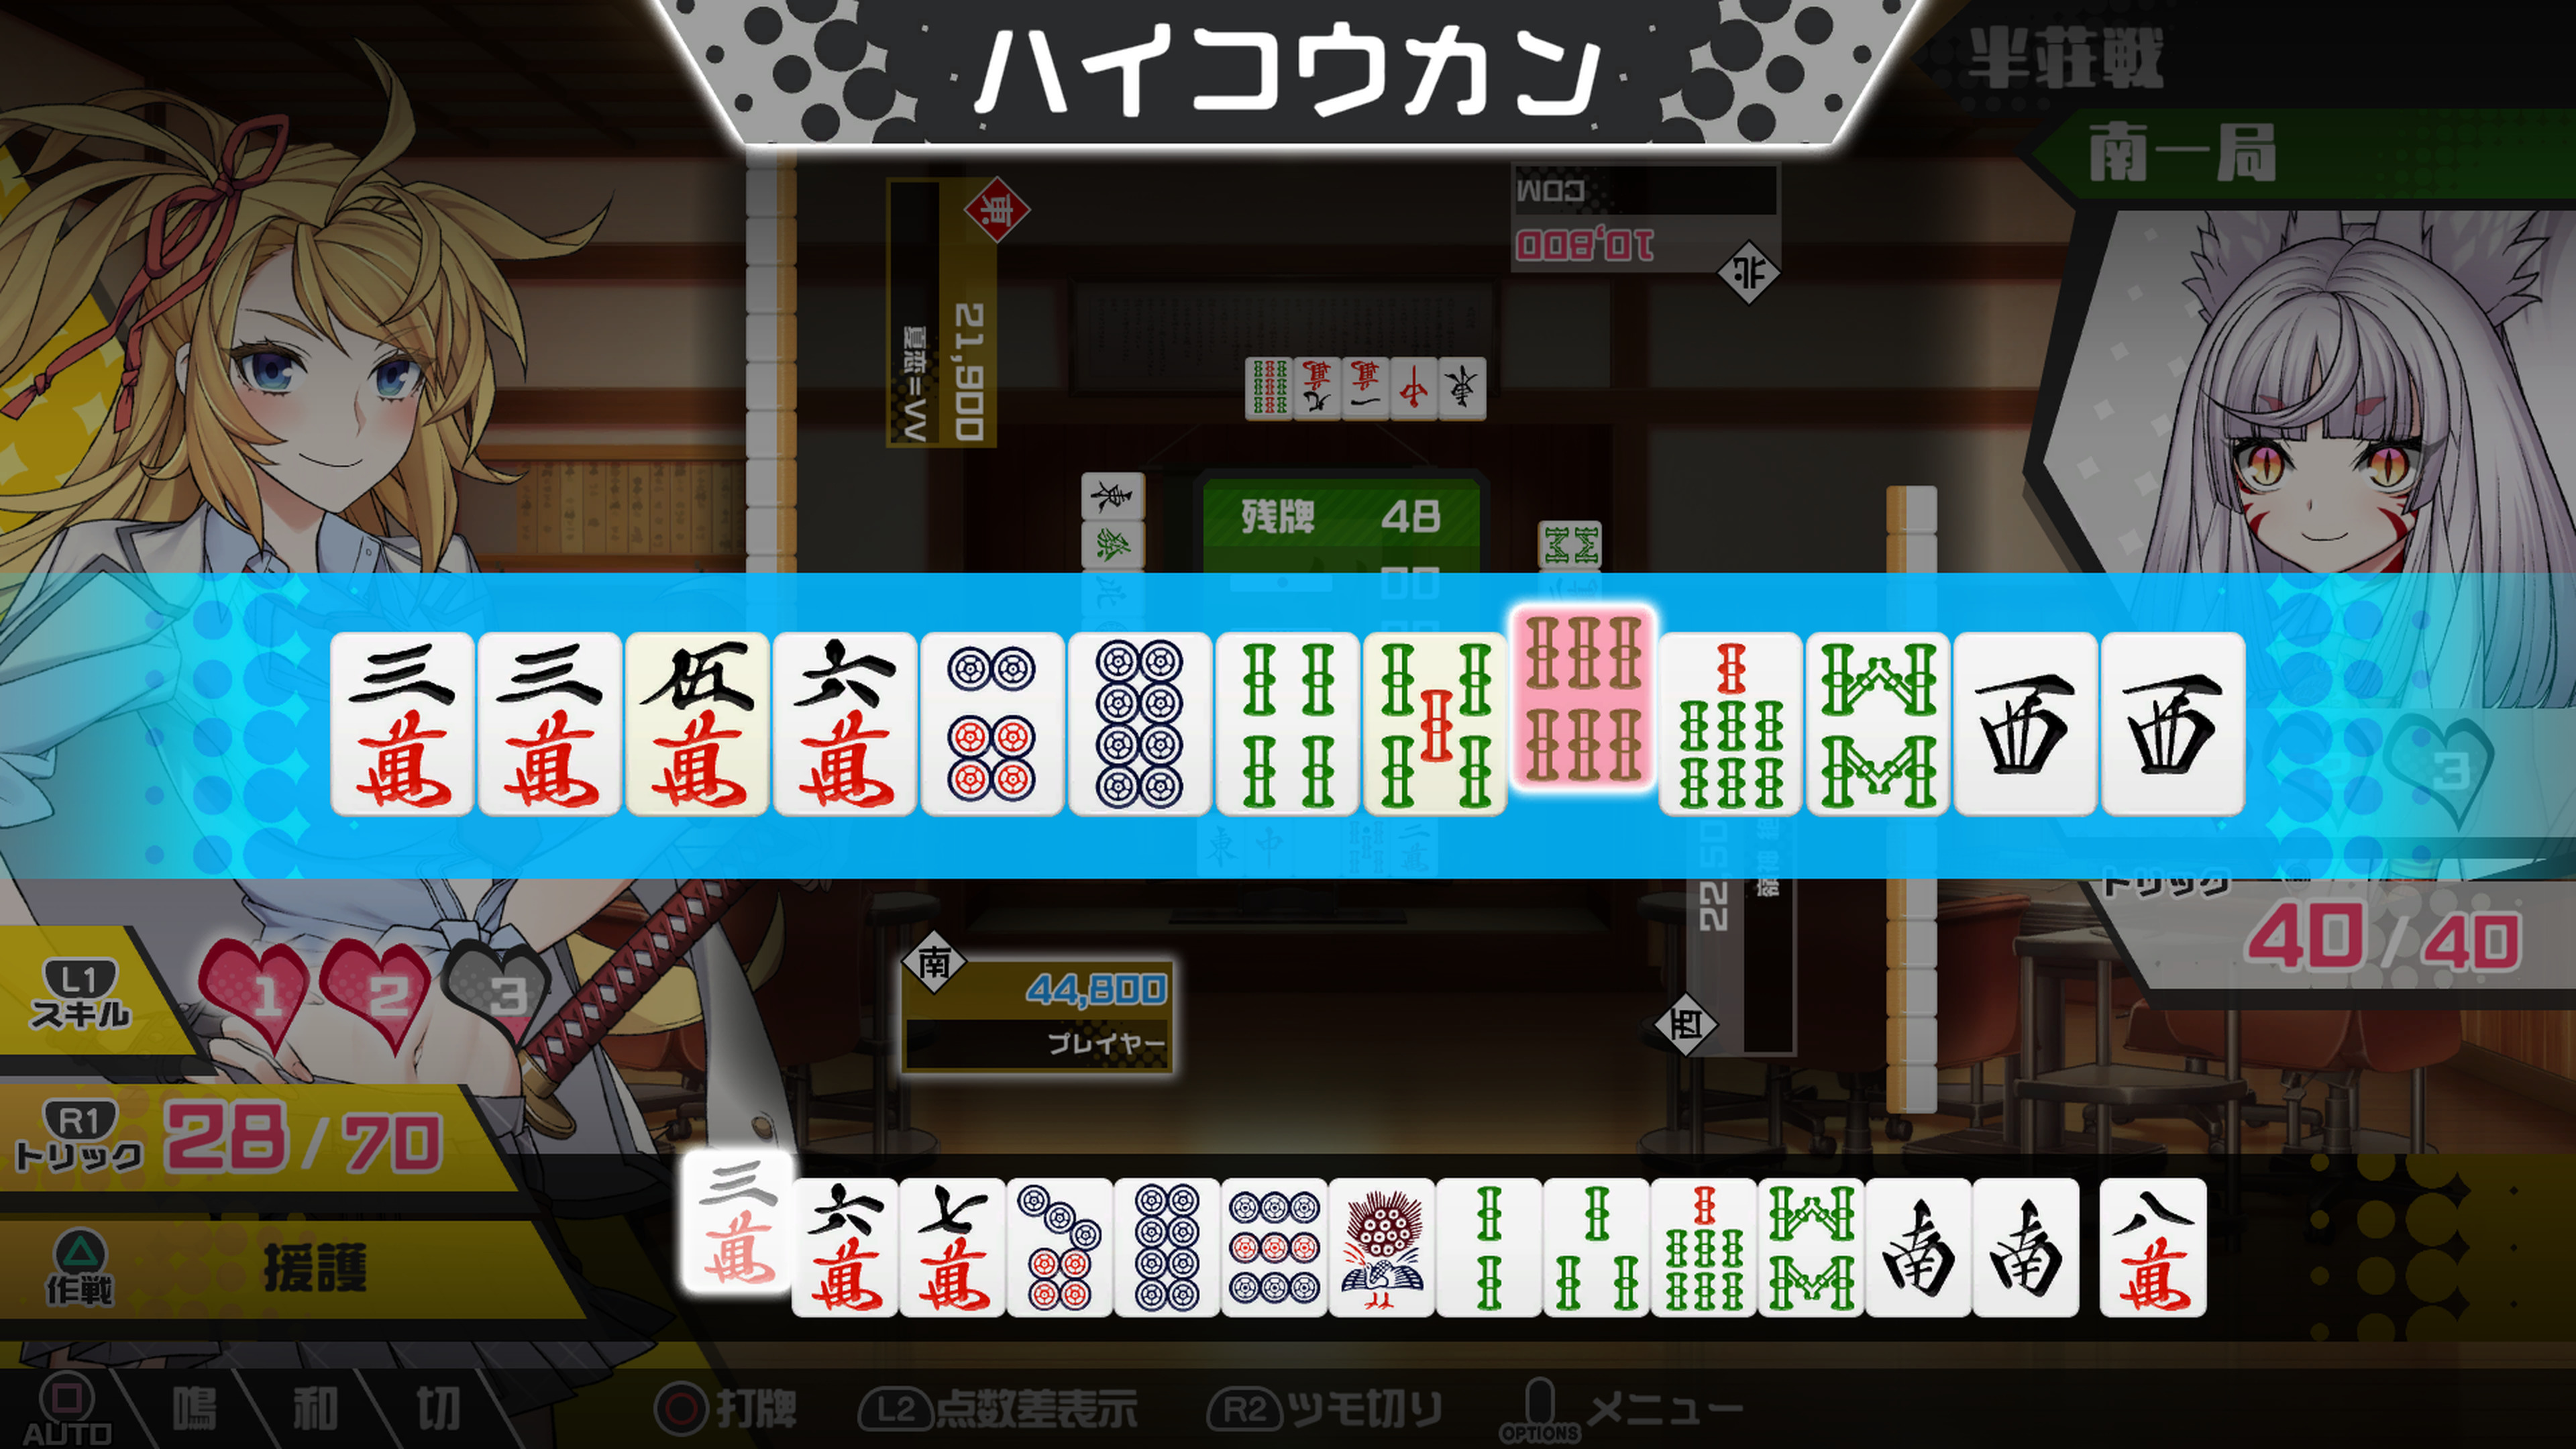 Steam Community :: Mahjong Riichi Multiplayer